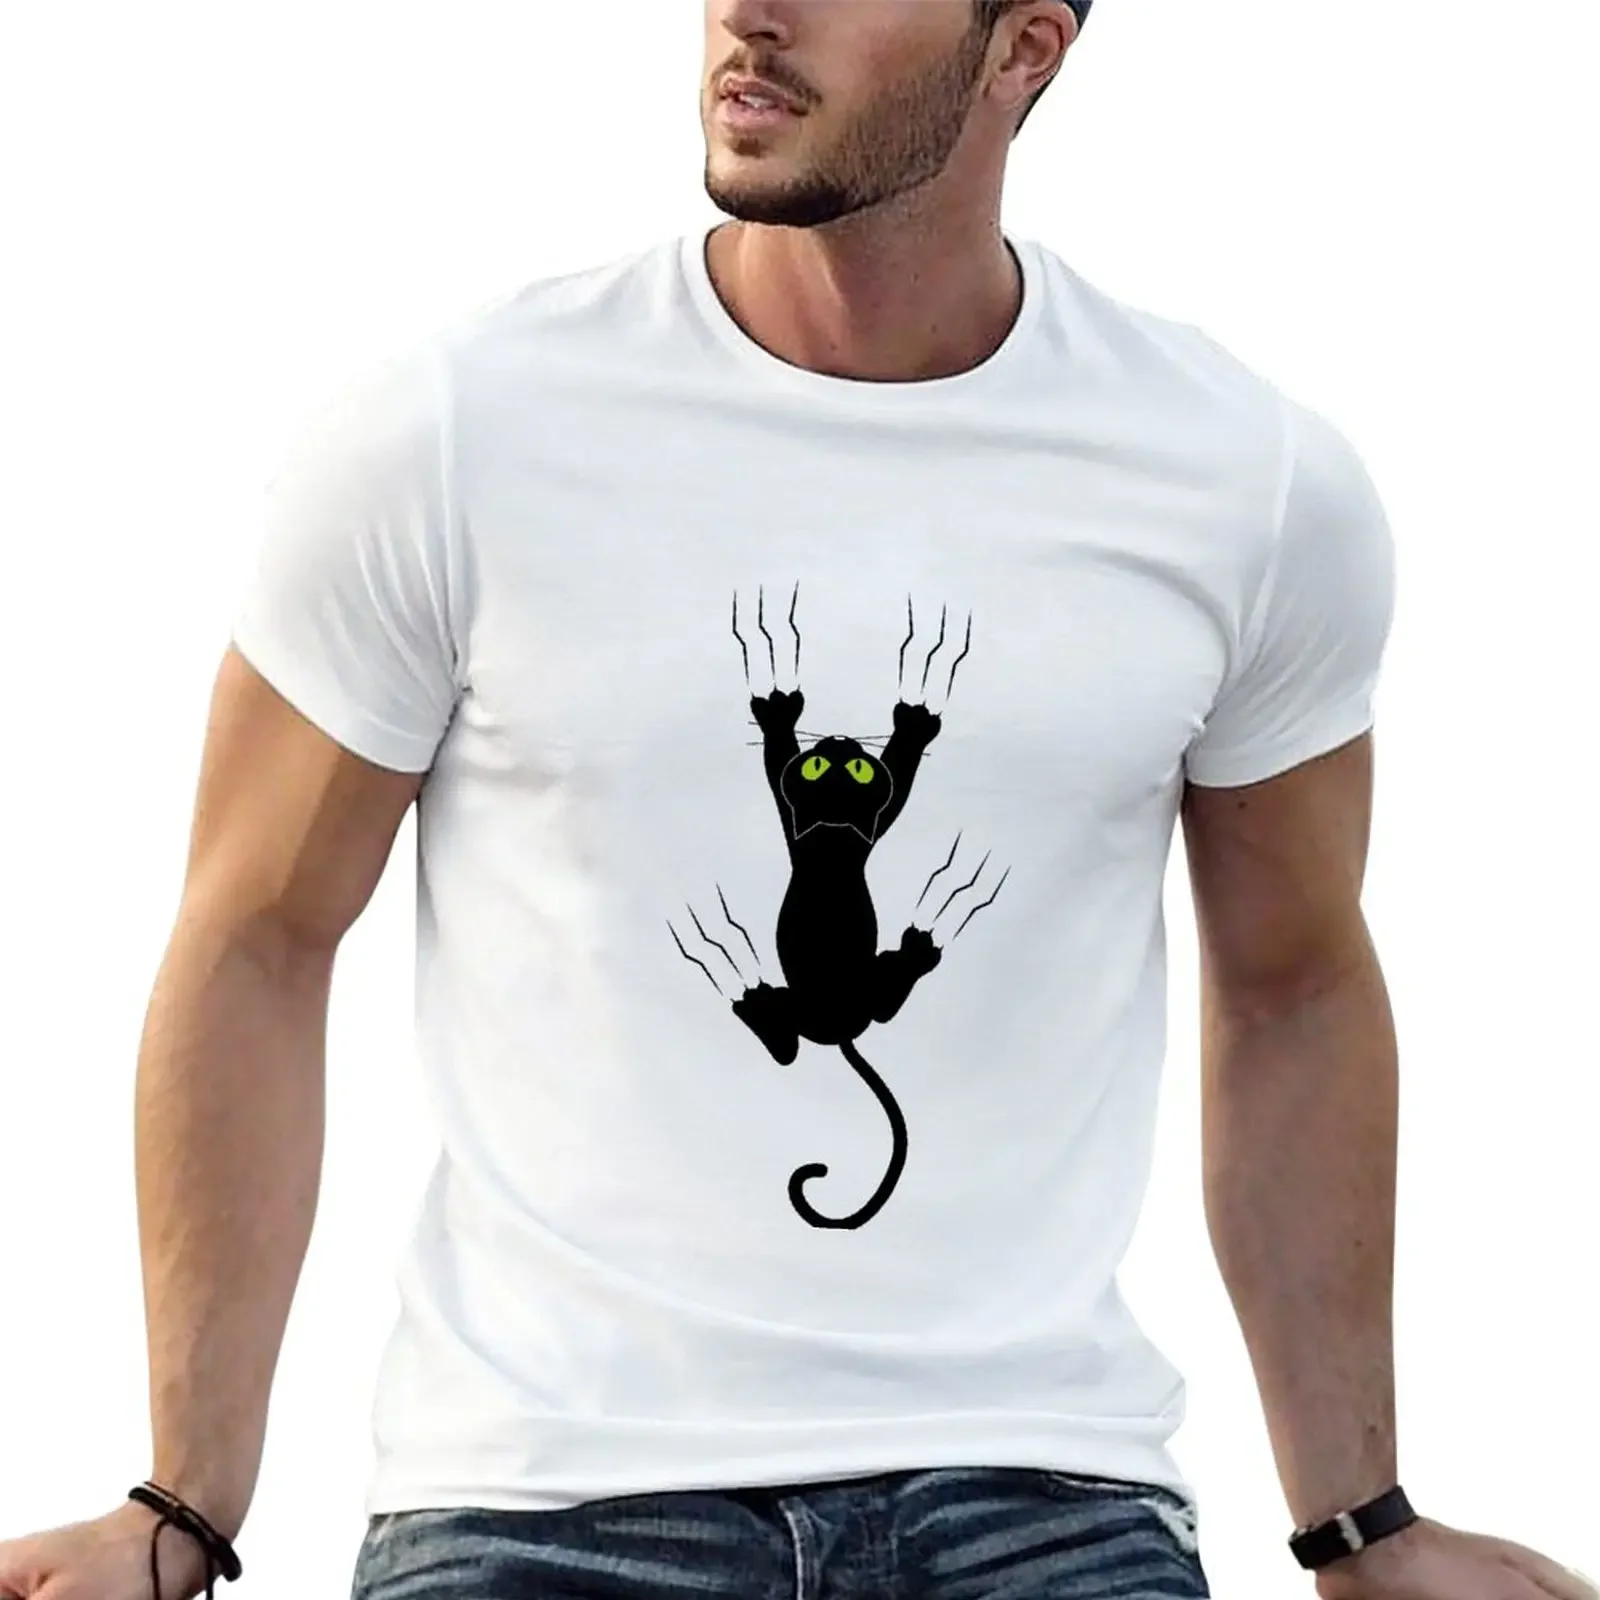 

Black Cat Holding On Slim Fit T-Shirt quick drying summer tops korean fashion mens plain t shirts